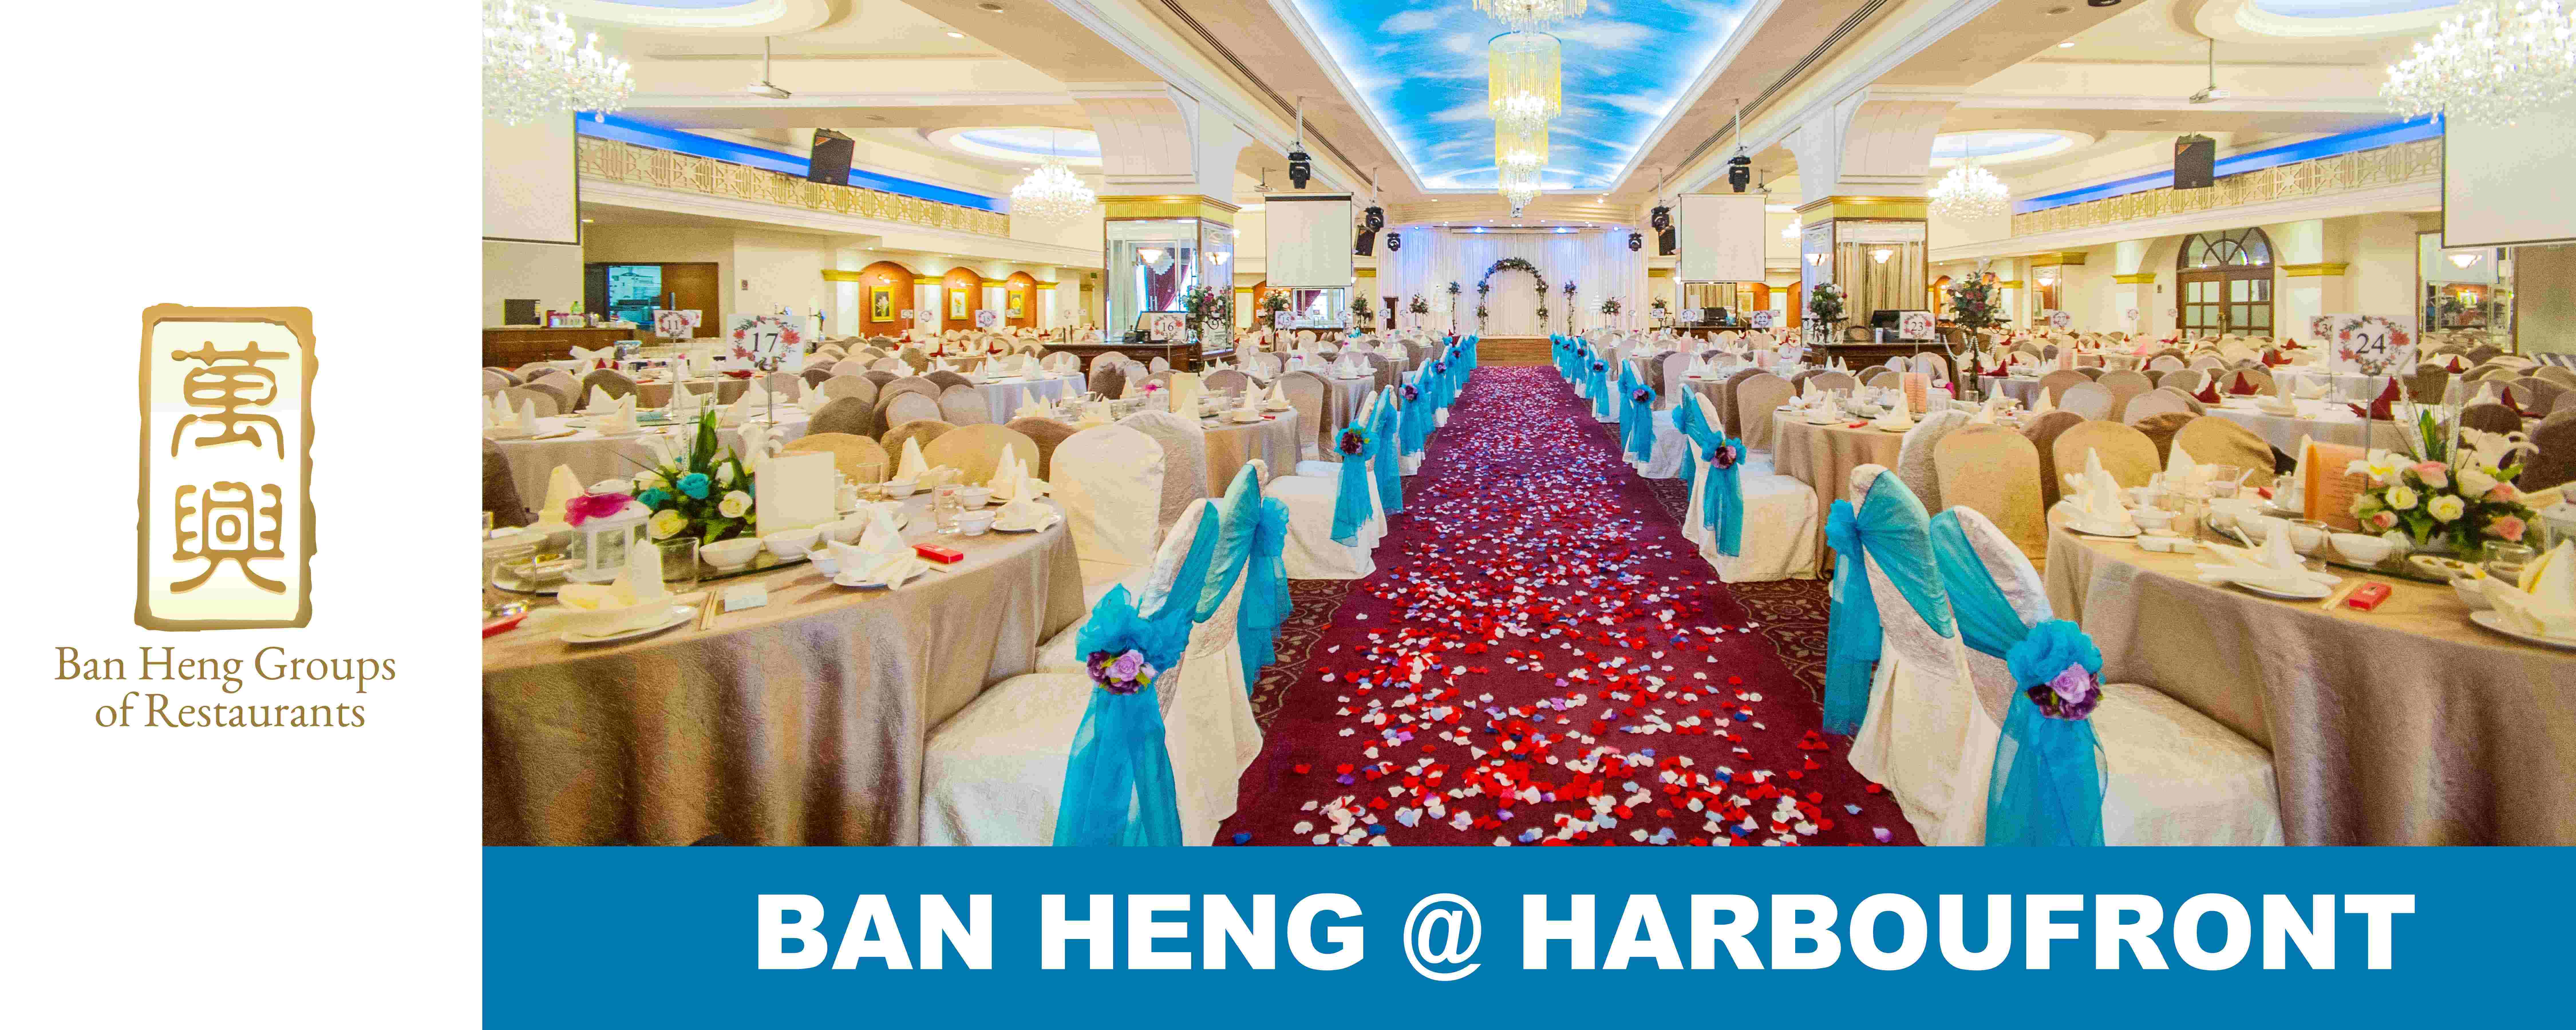 Ban Heng @ HarbourFront 